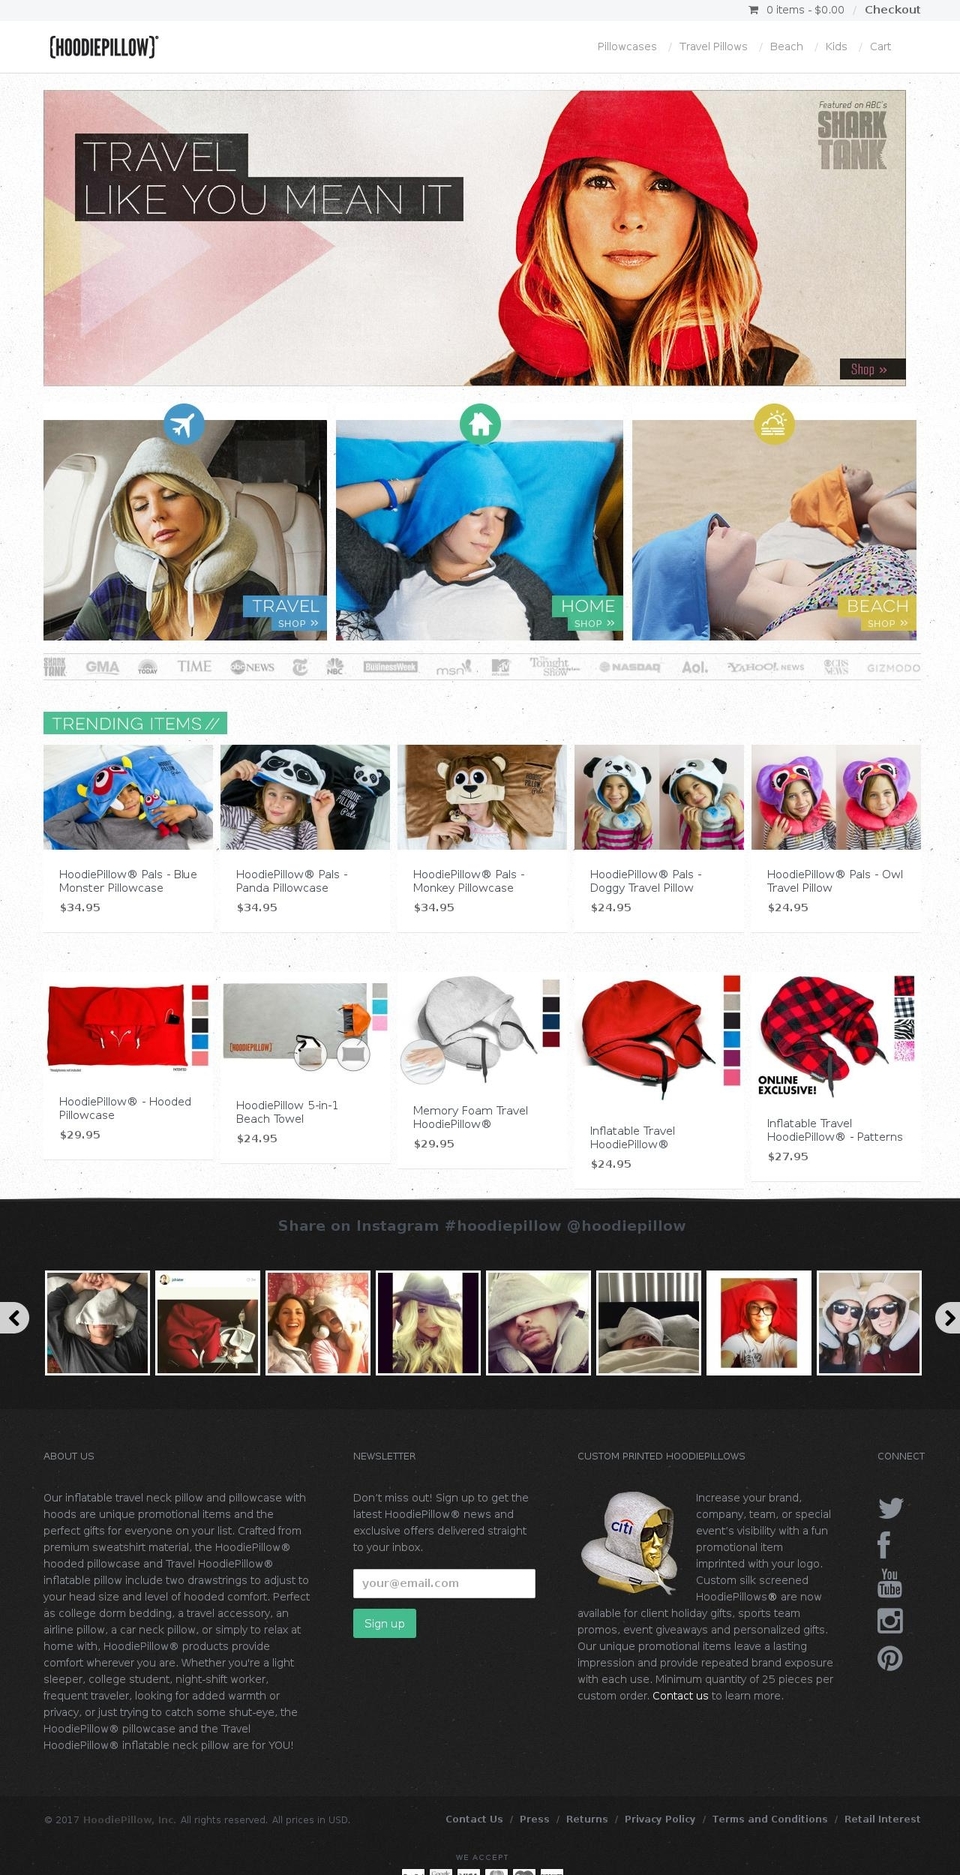 pillowhoodies.com shopify website screenshot